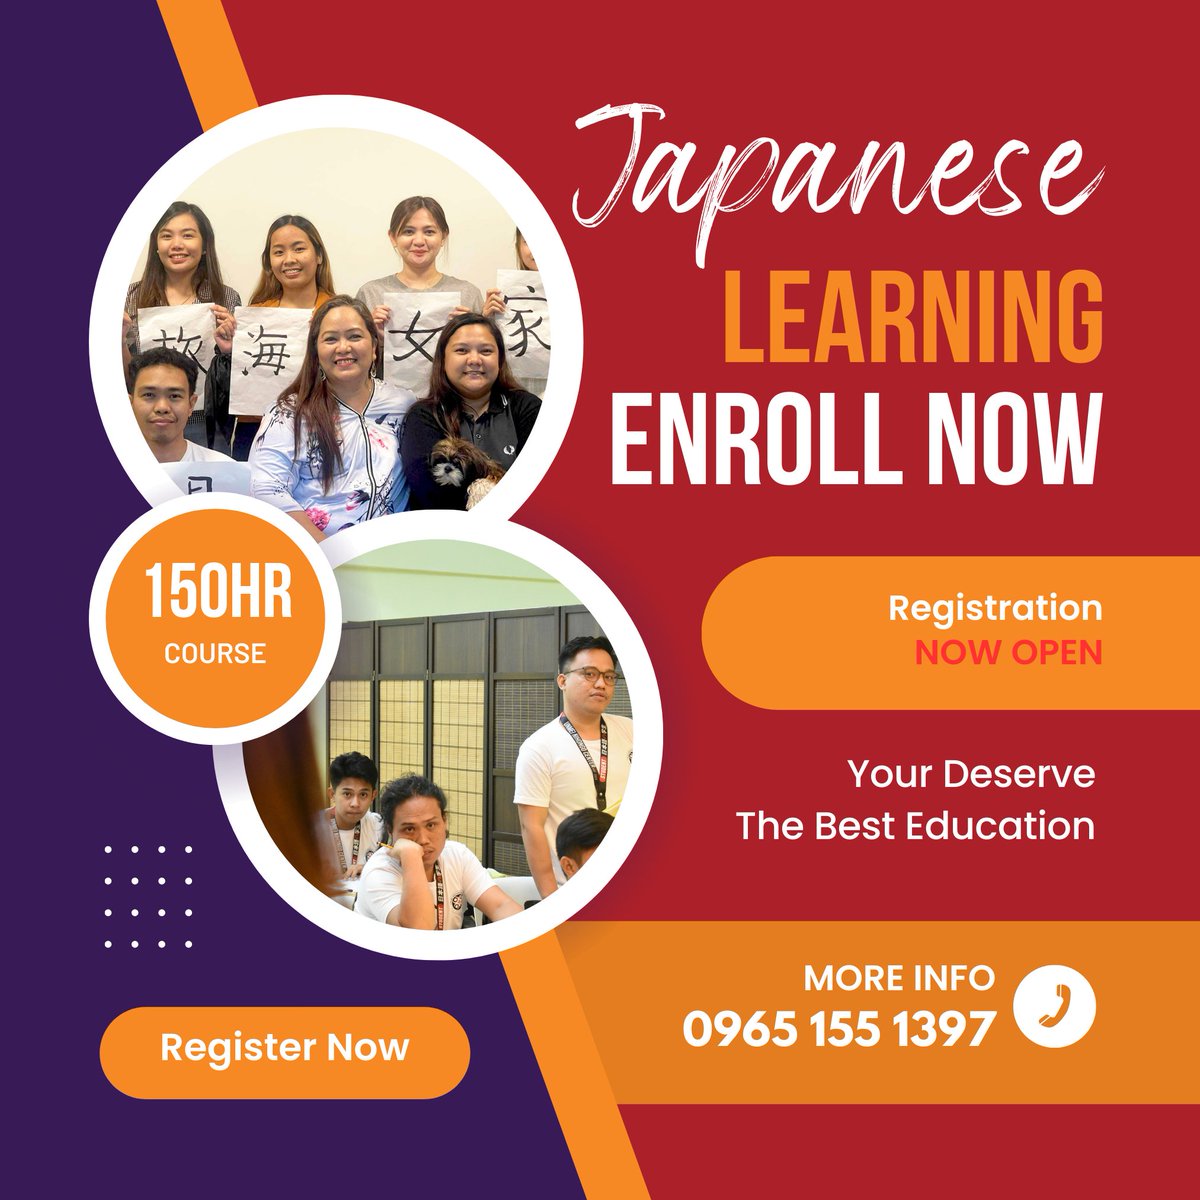 Learn Japanese!

Pre enroll: forms.gle/ENPRJ2CFkbM4uz…

#Japan #JapaneseLanguage #Japanese #LearnJapanese #Nihongo #JapaneseLanguageSchool #JapaneseCulture #studyjapanese #UnmeiNihongoCenter